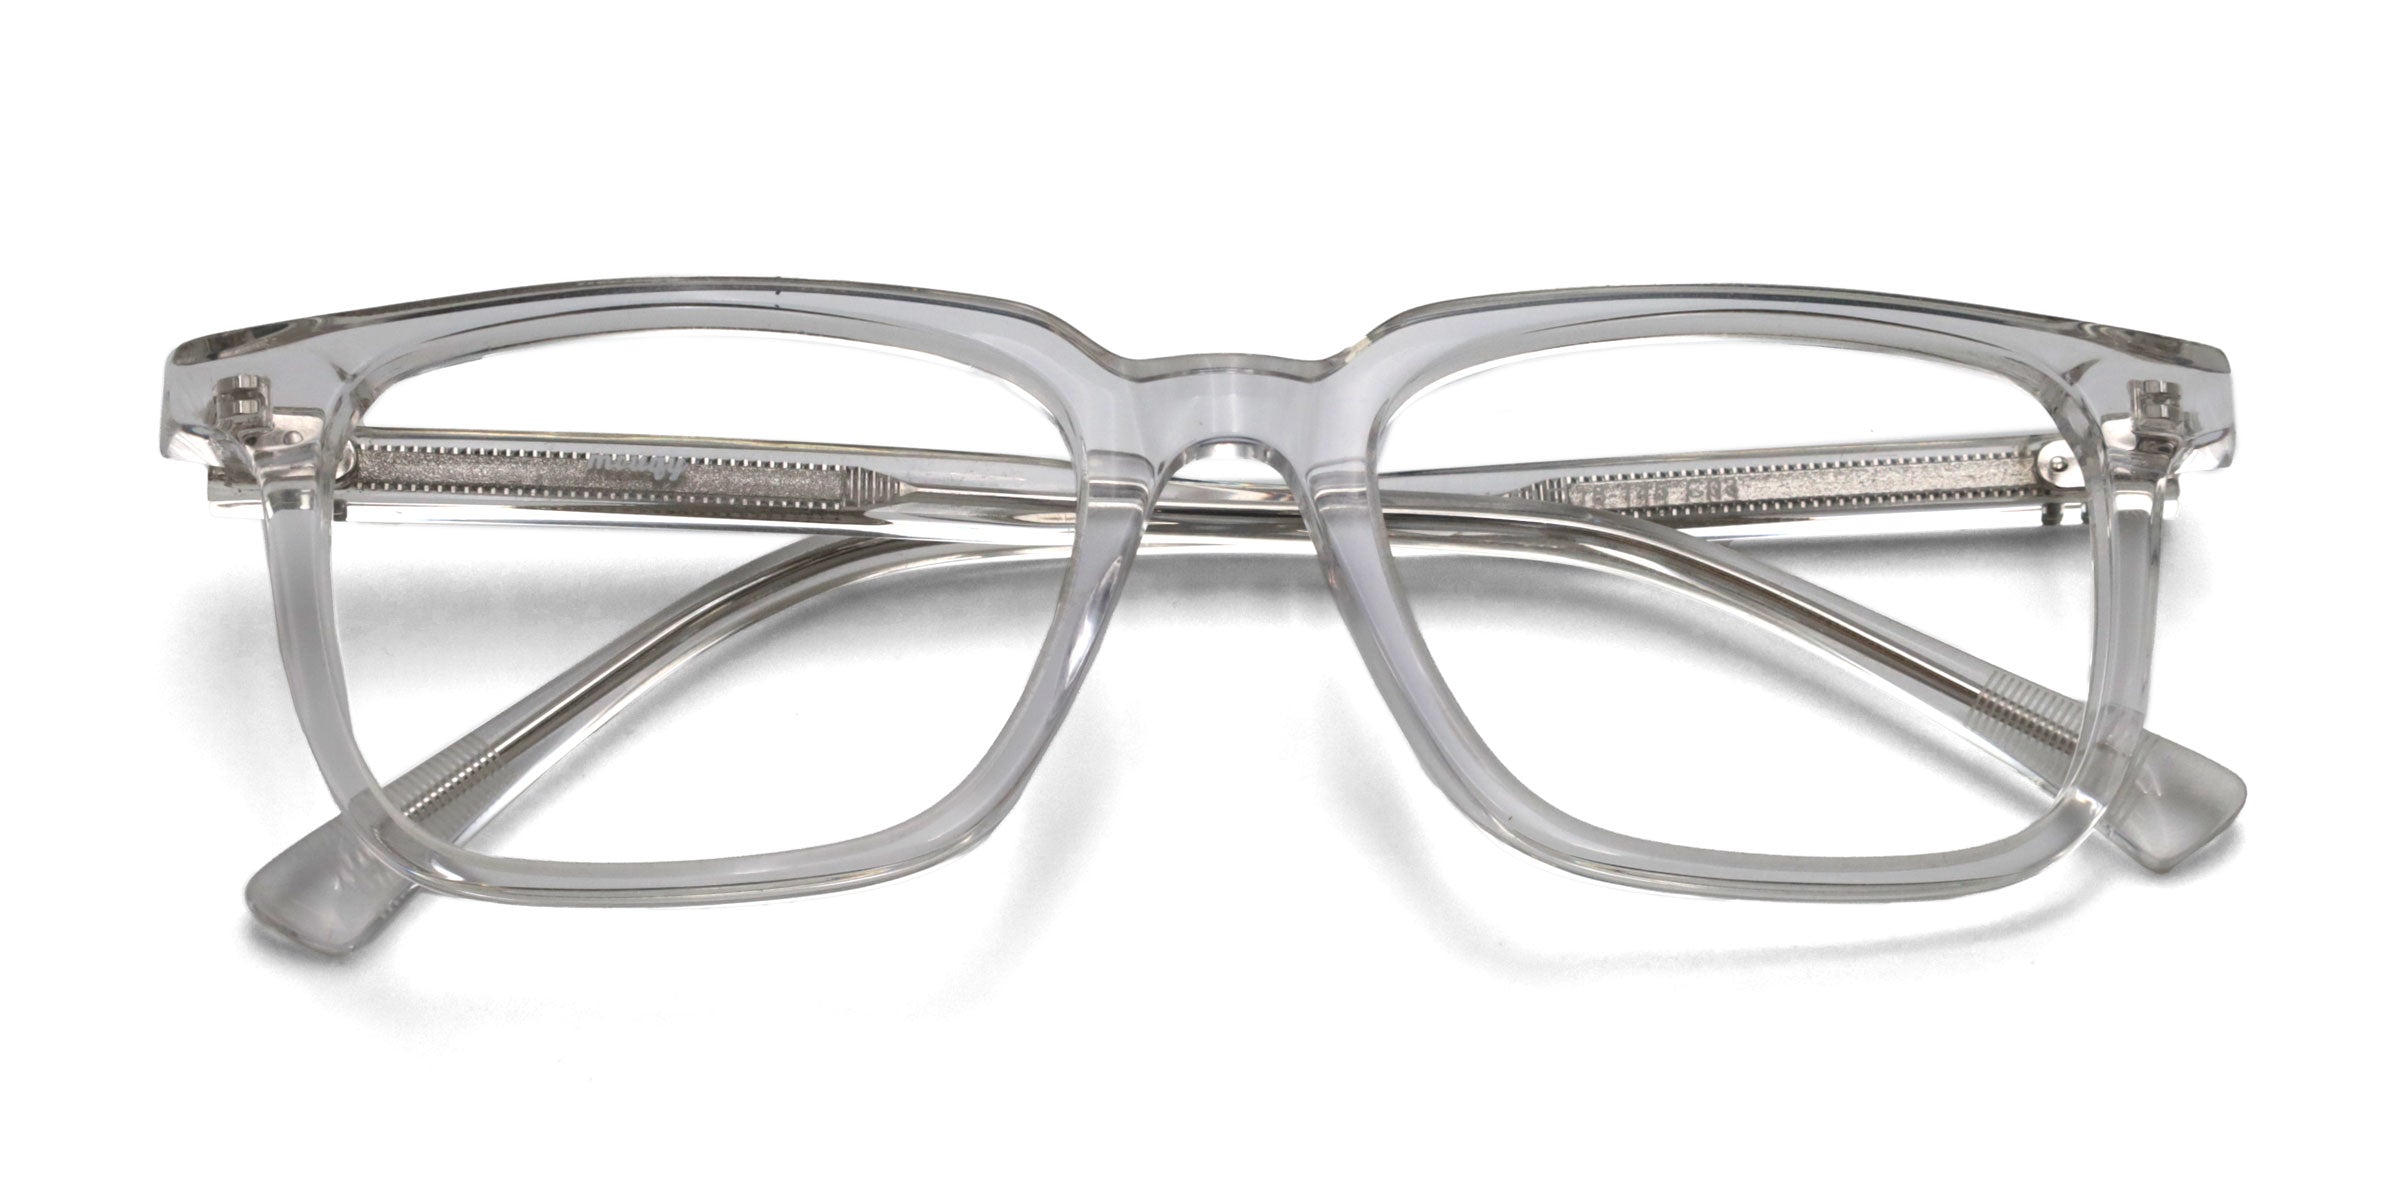 Hype Round Black eyeglasses frames top view